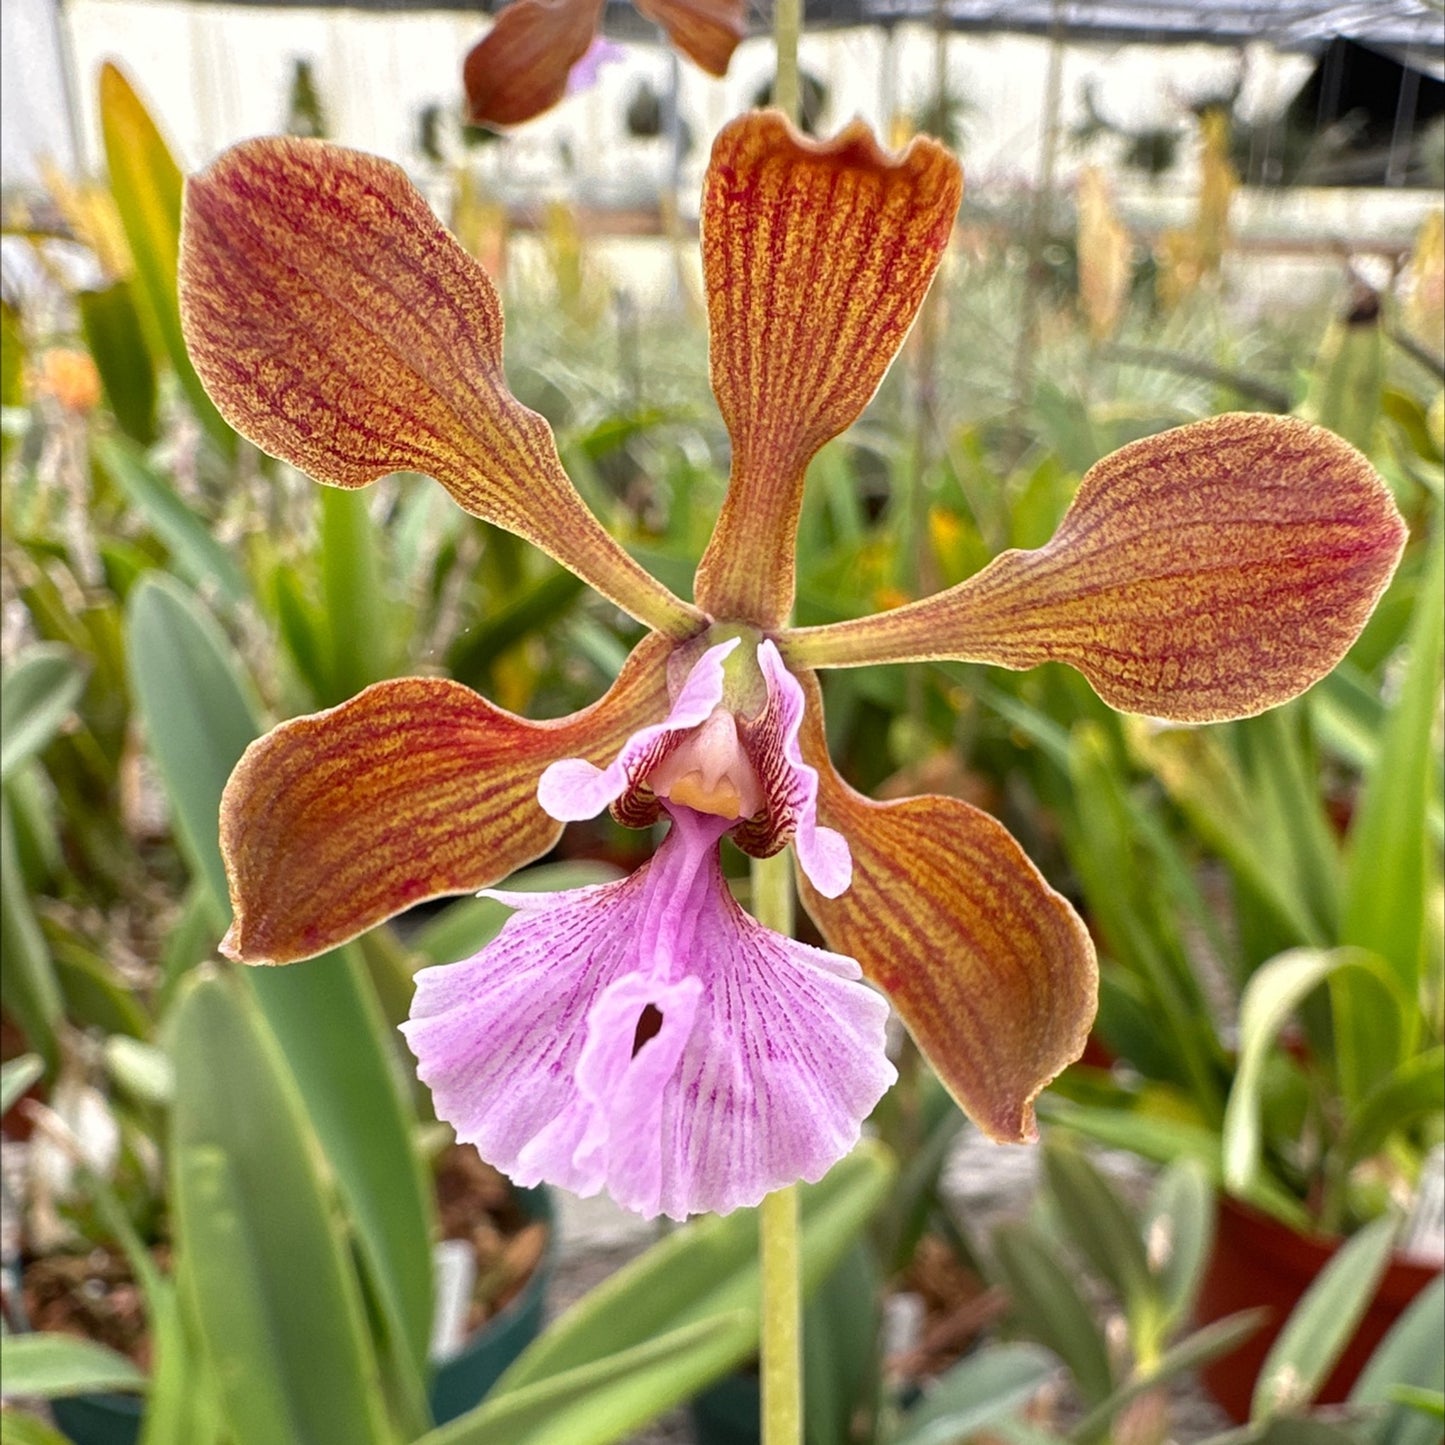 Encyclia hanburyi / Live bare-root orchid